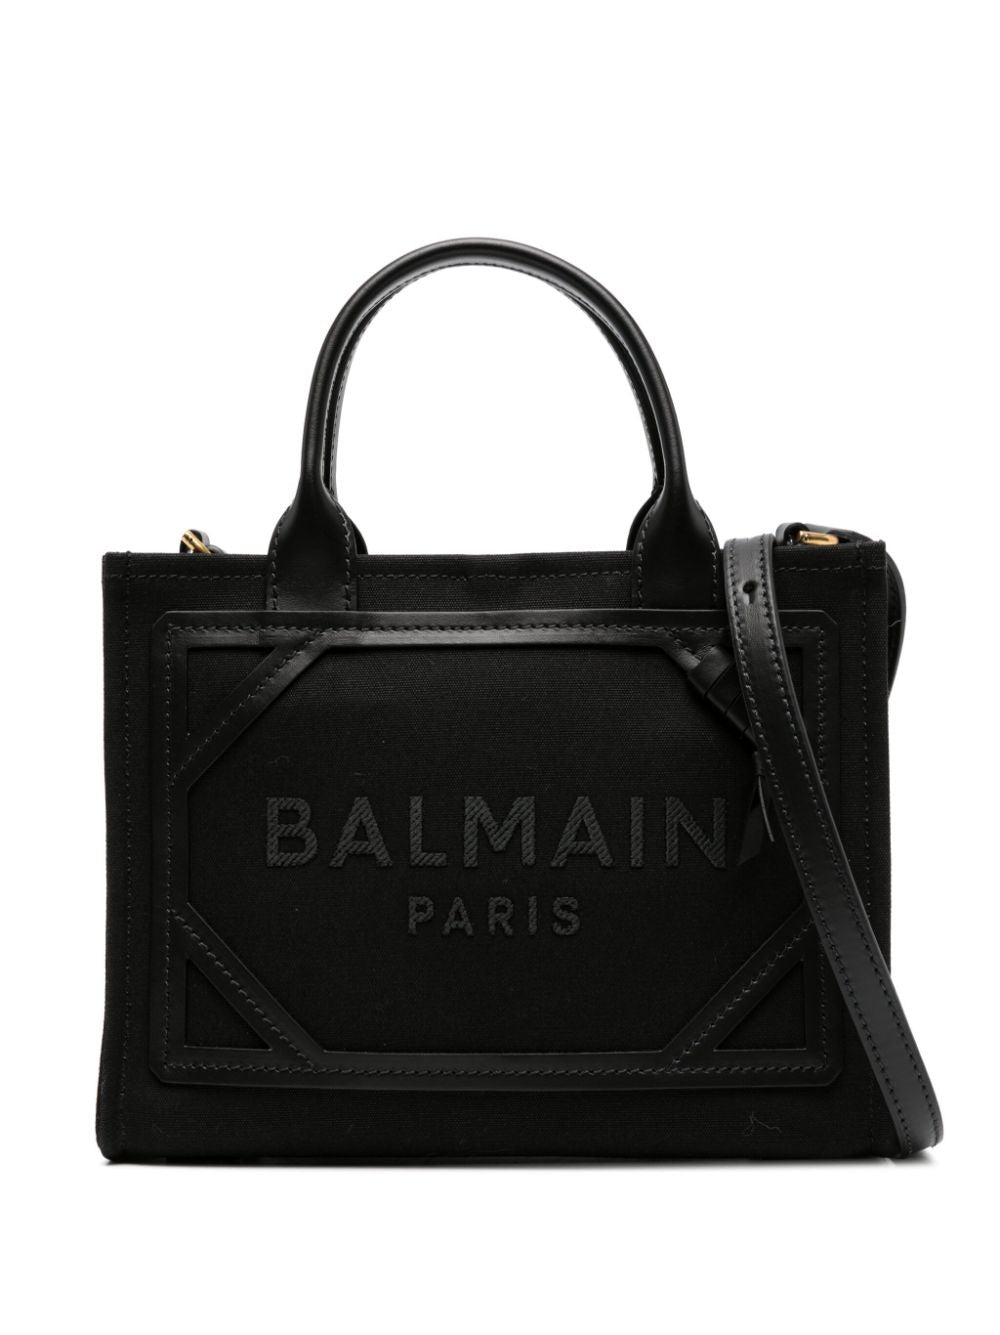 Balmain 'b-army' Shoulder Bag